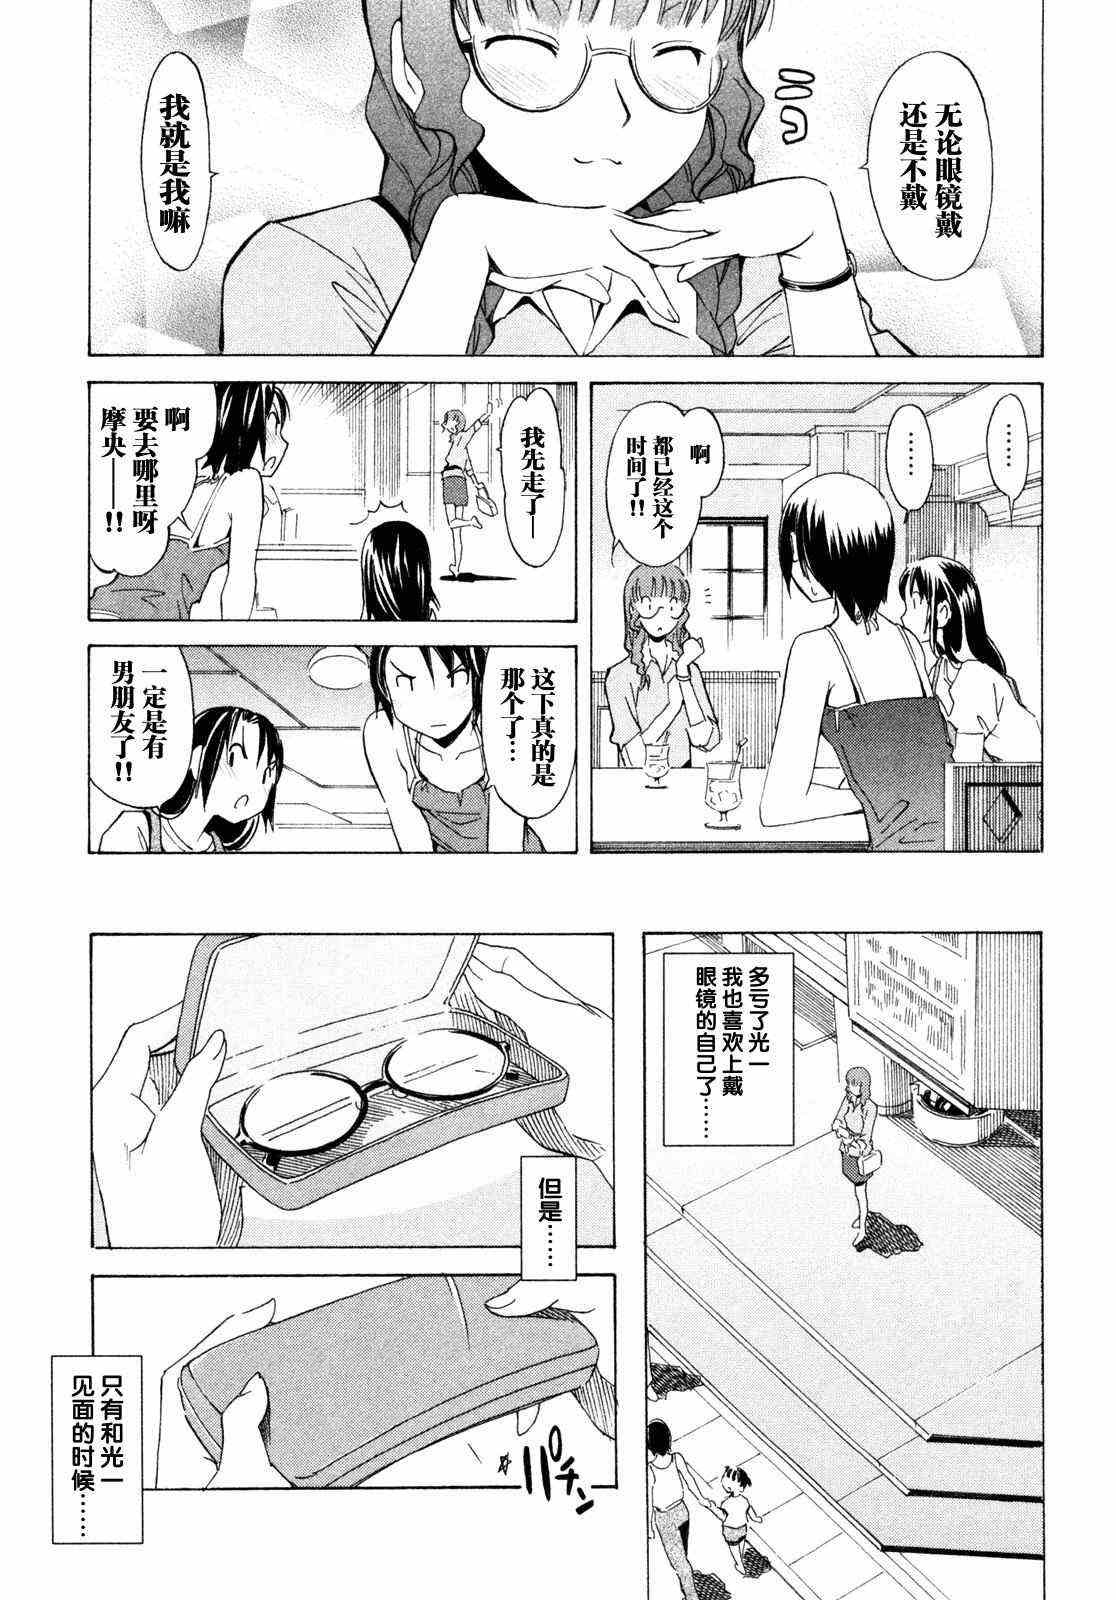 《君吻》漫画 MASAHIRO ITOSUGI